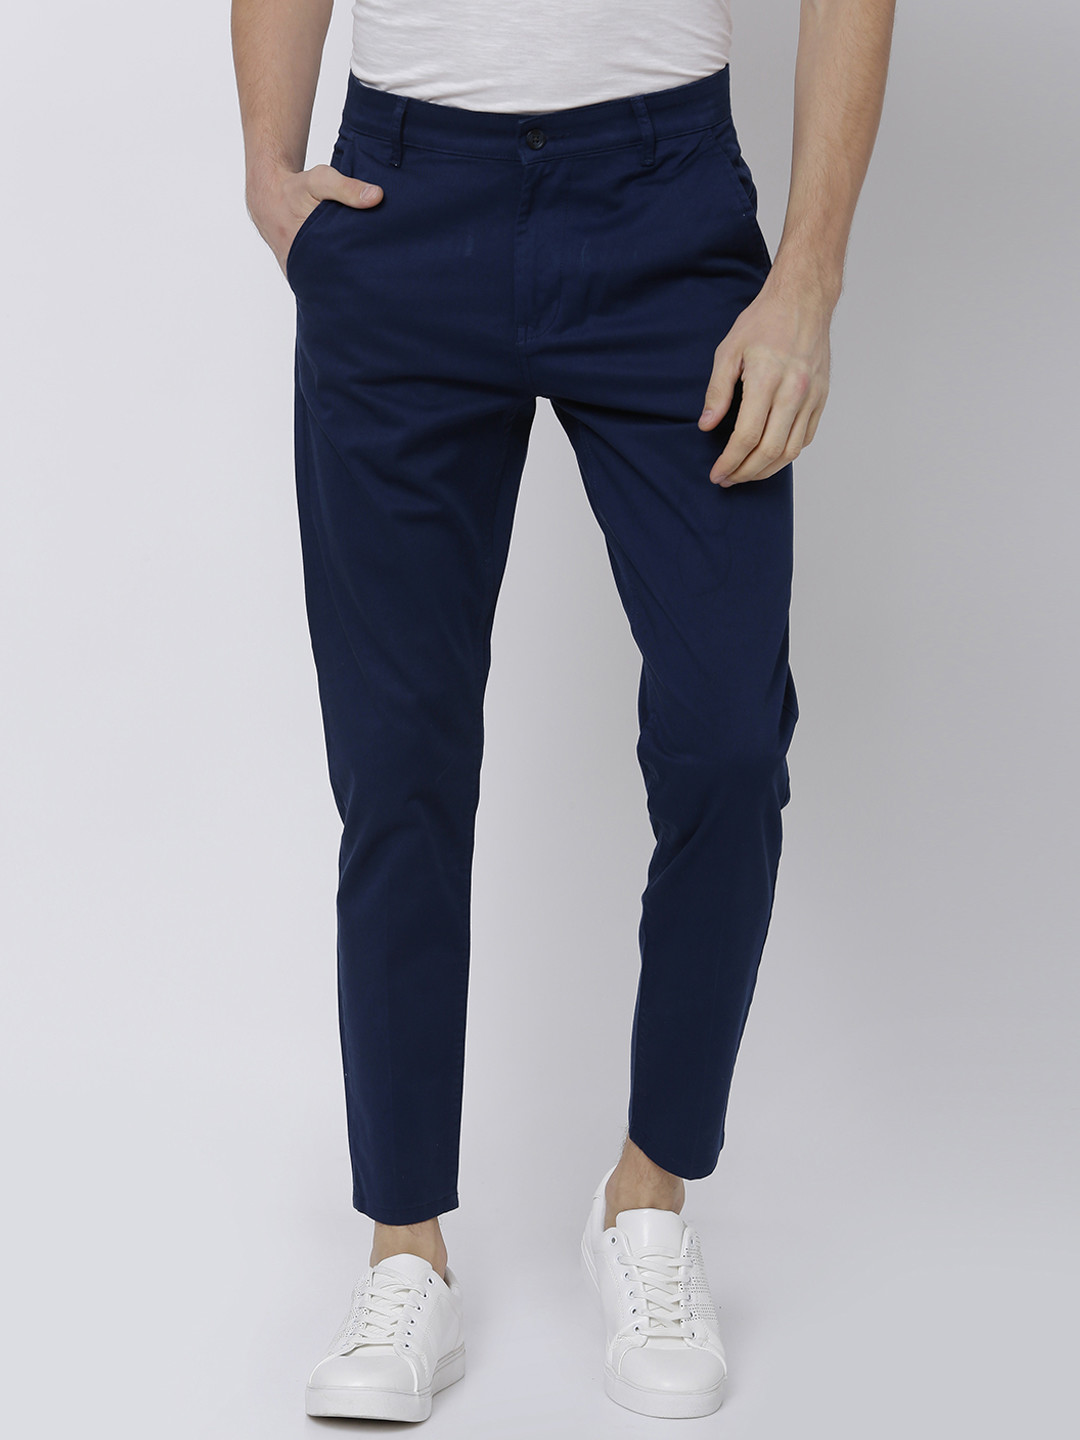 Buy Fashlook Navy Blue Slim Fit Casual Trousers For Men Online @ ₹679 ...